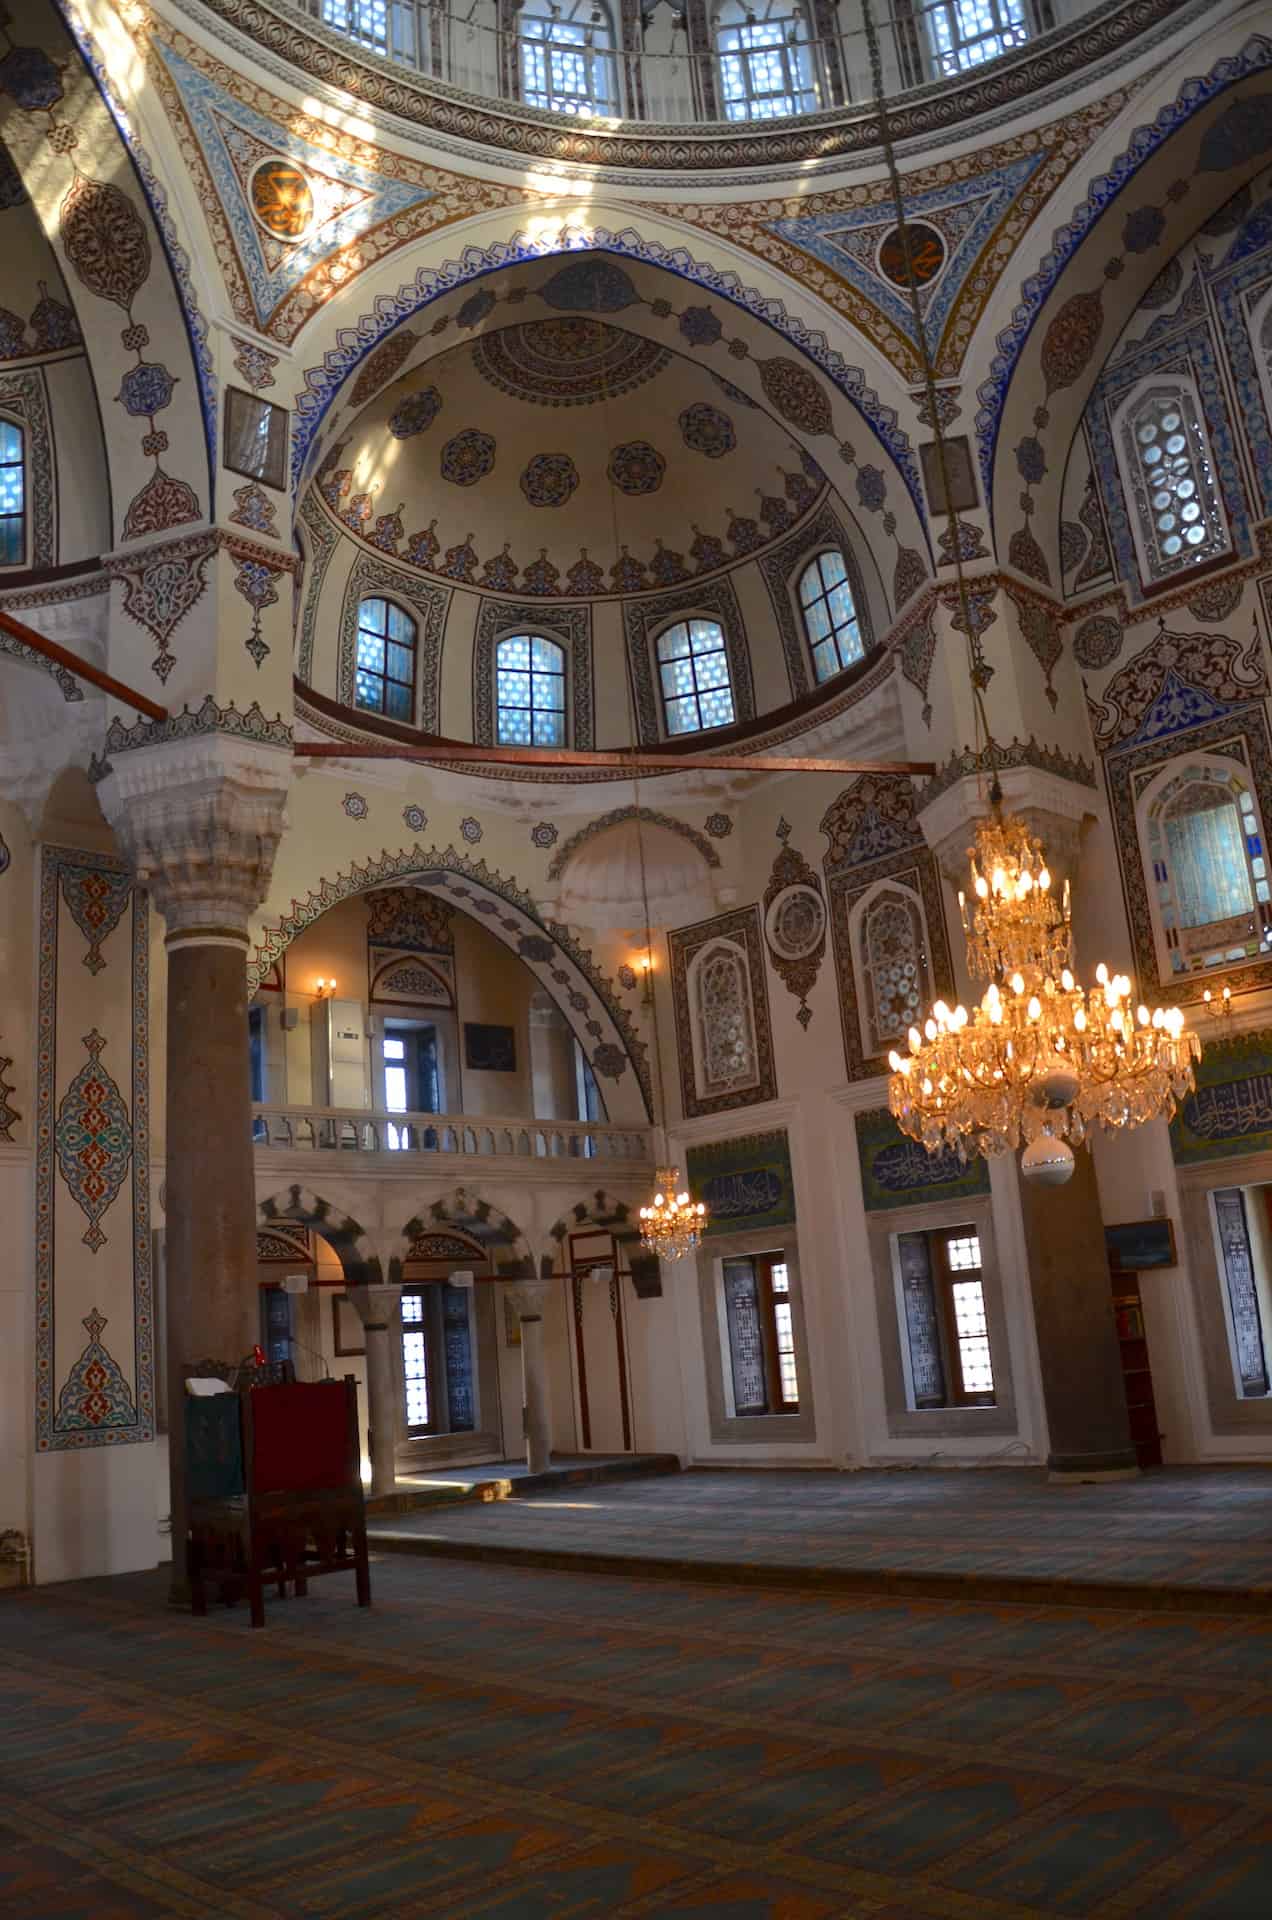 Prayer hall of the Kara Ahmed Pasha Mosque